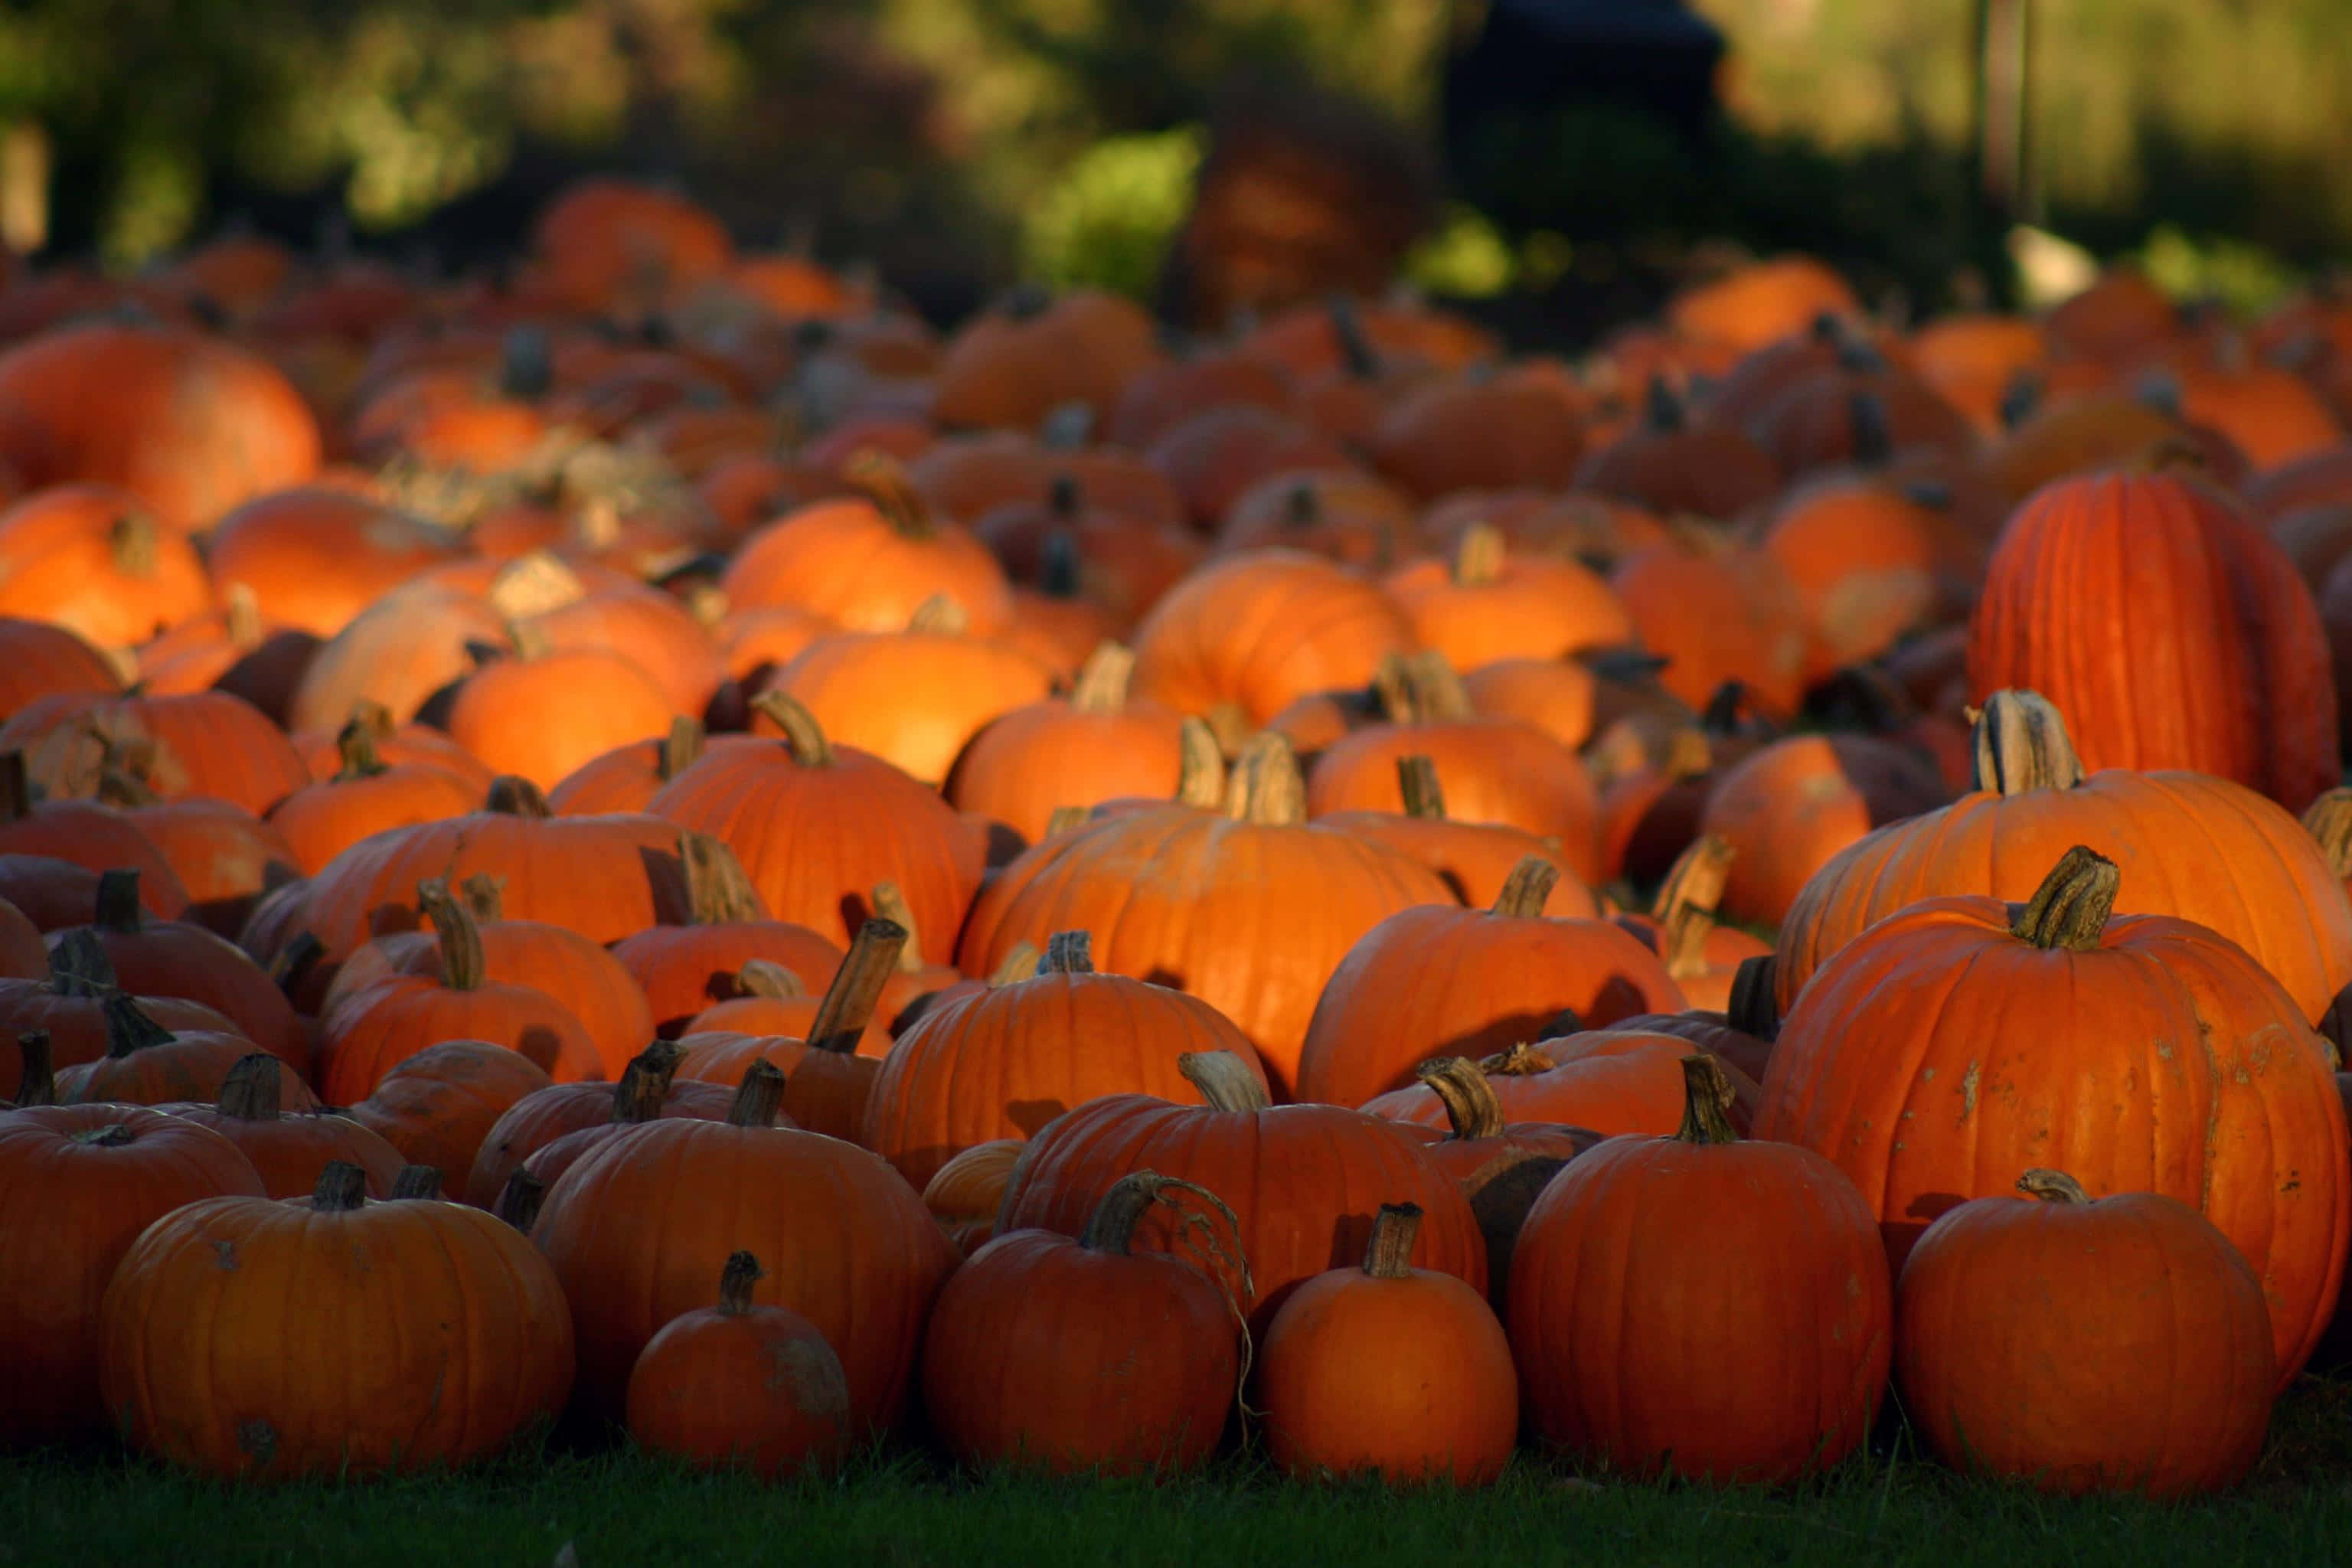 "Happy Fall Harvest - Pumpkins Everywhere"